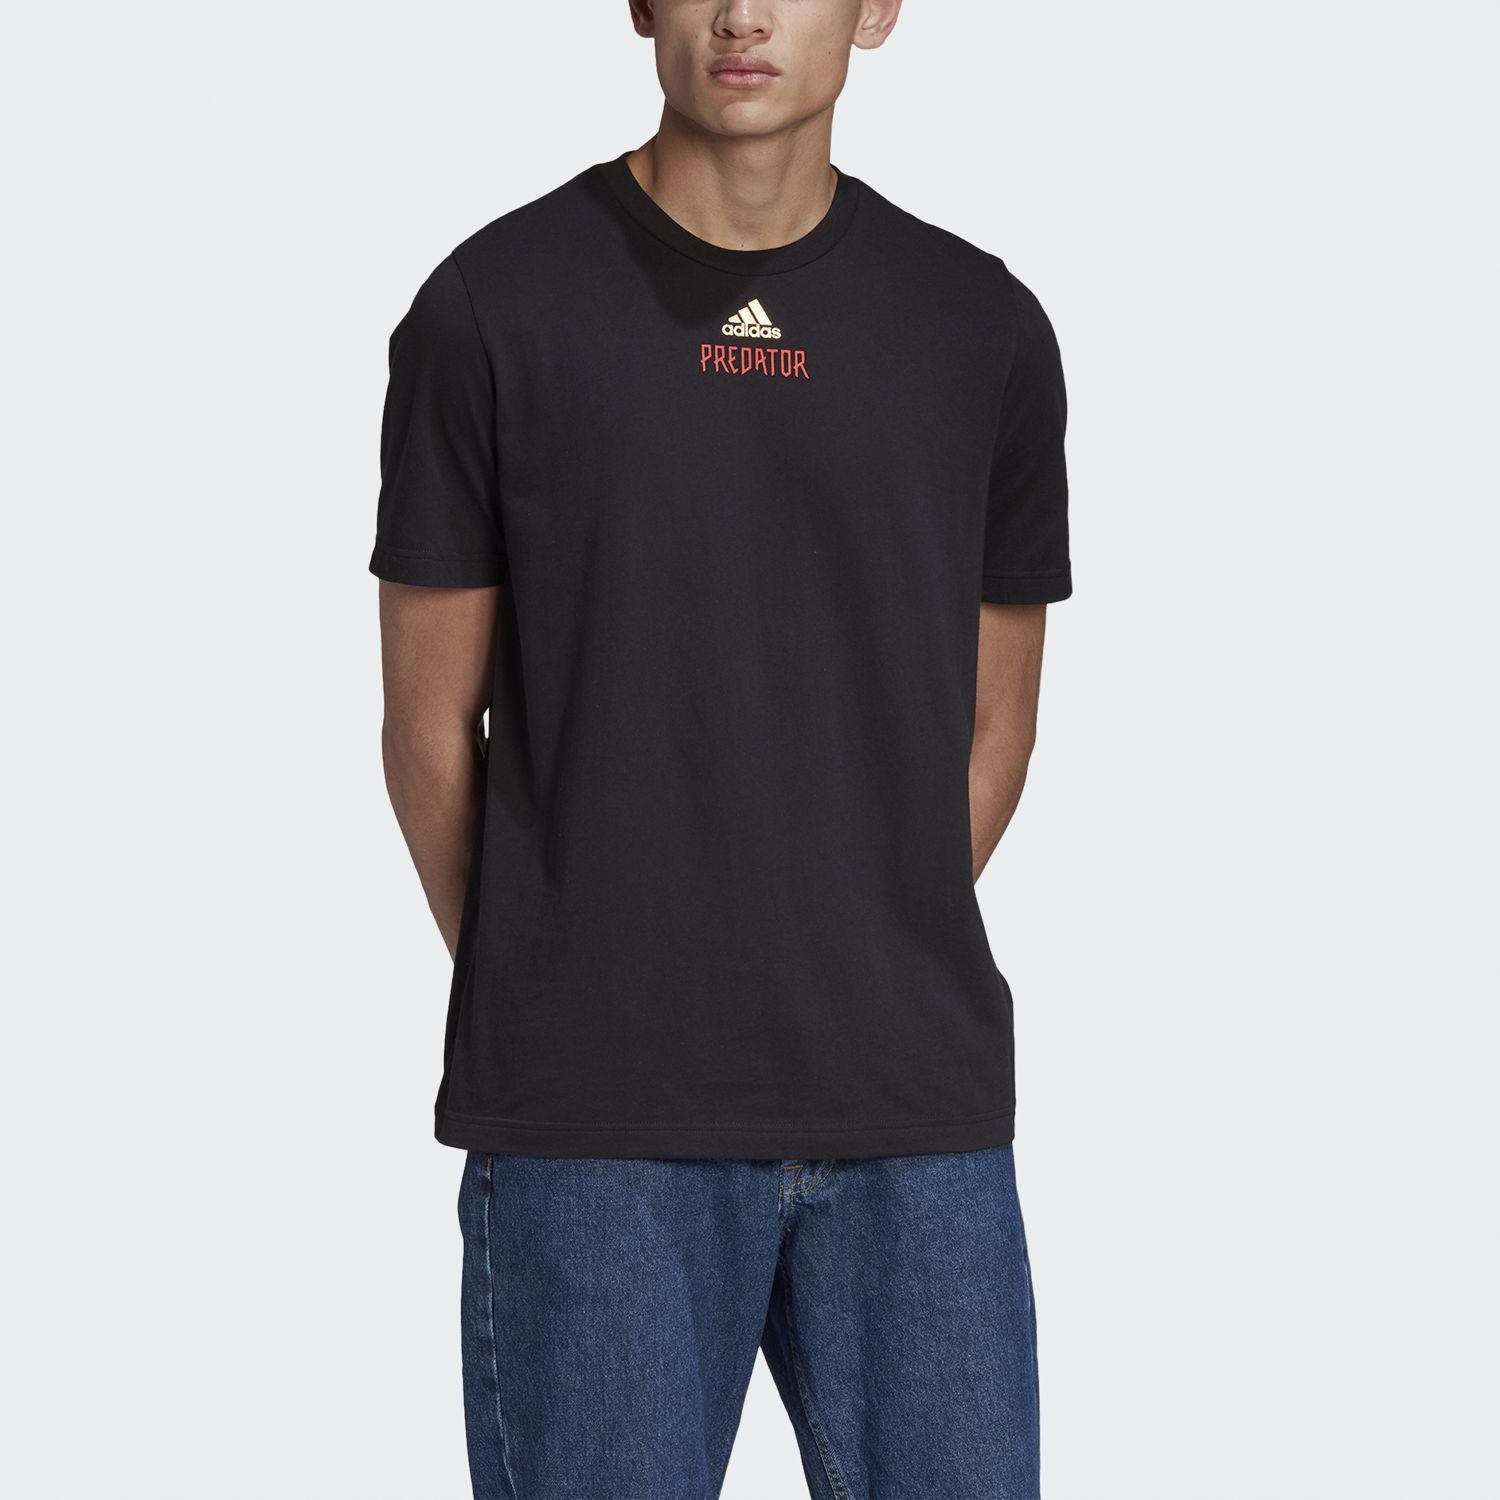 Adidas Predator Essential T-Shirt for Sale by joelaah